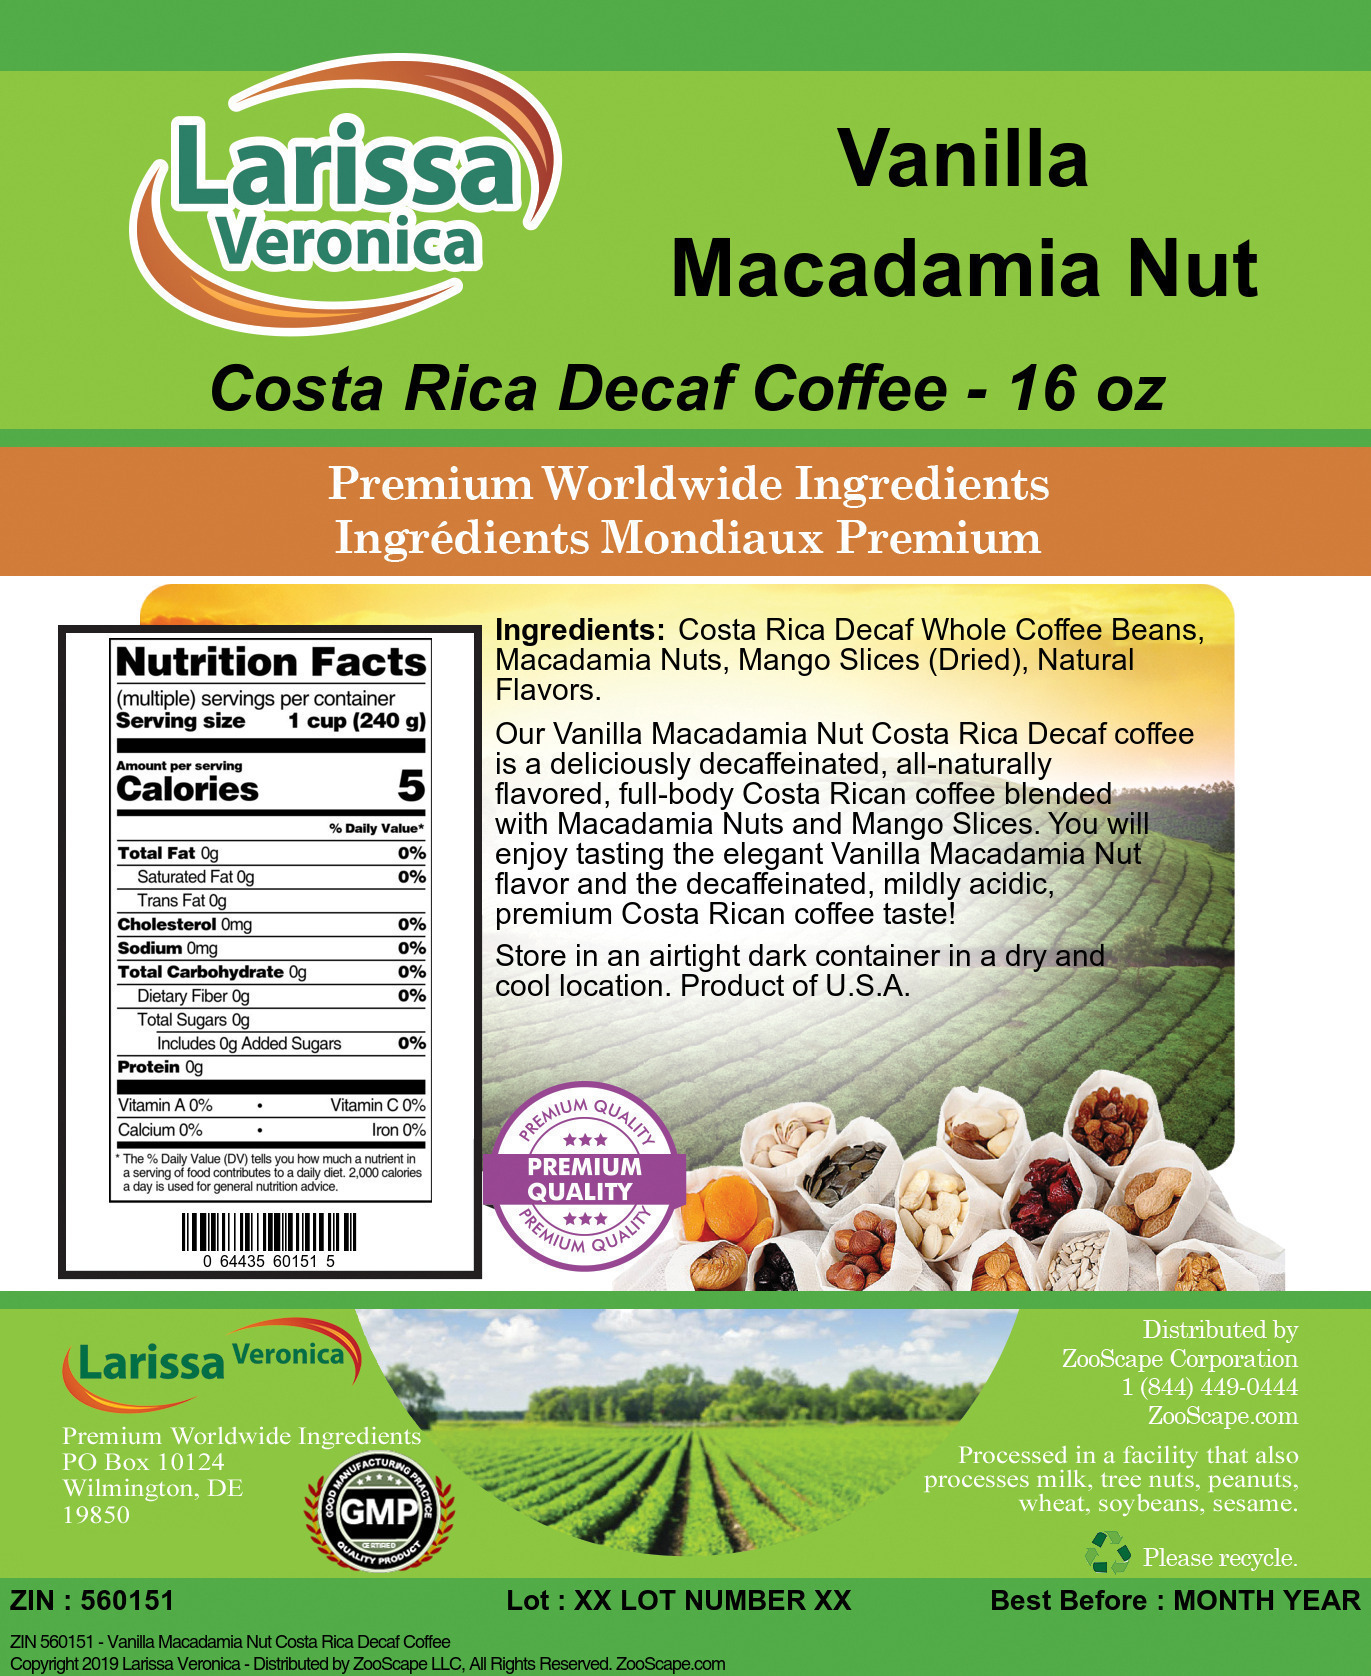 Vanilla Macadamia Nut Costa Rica Decaf Coffee - Label